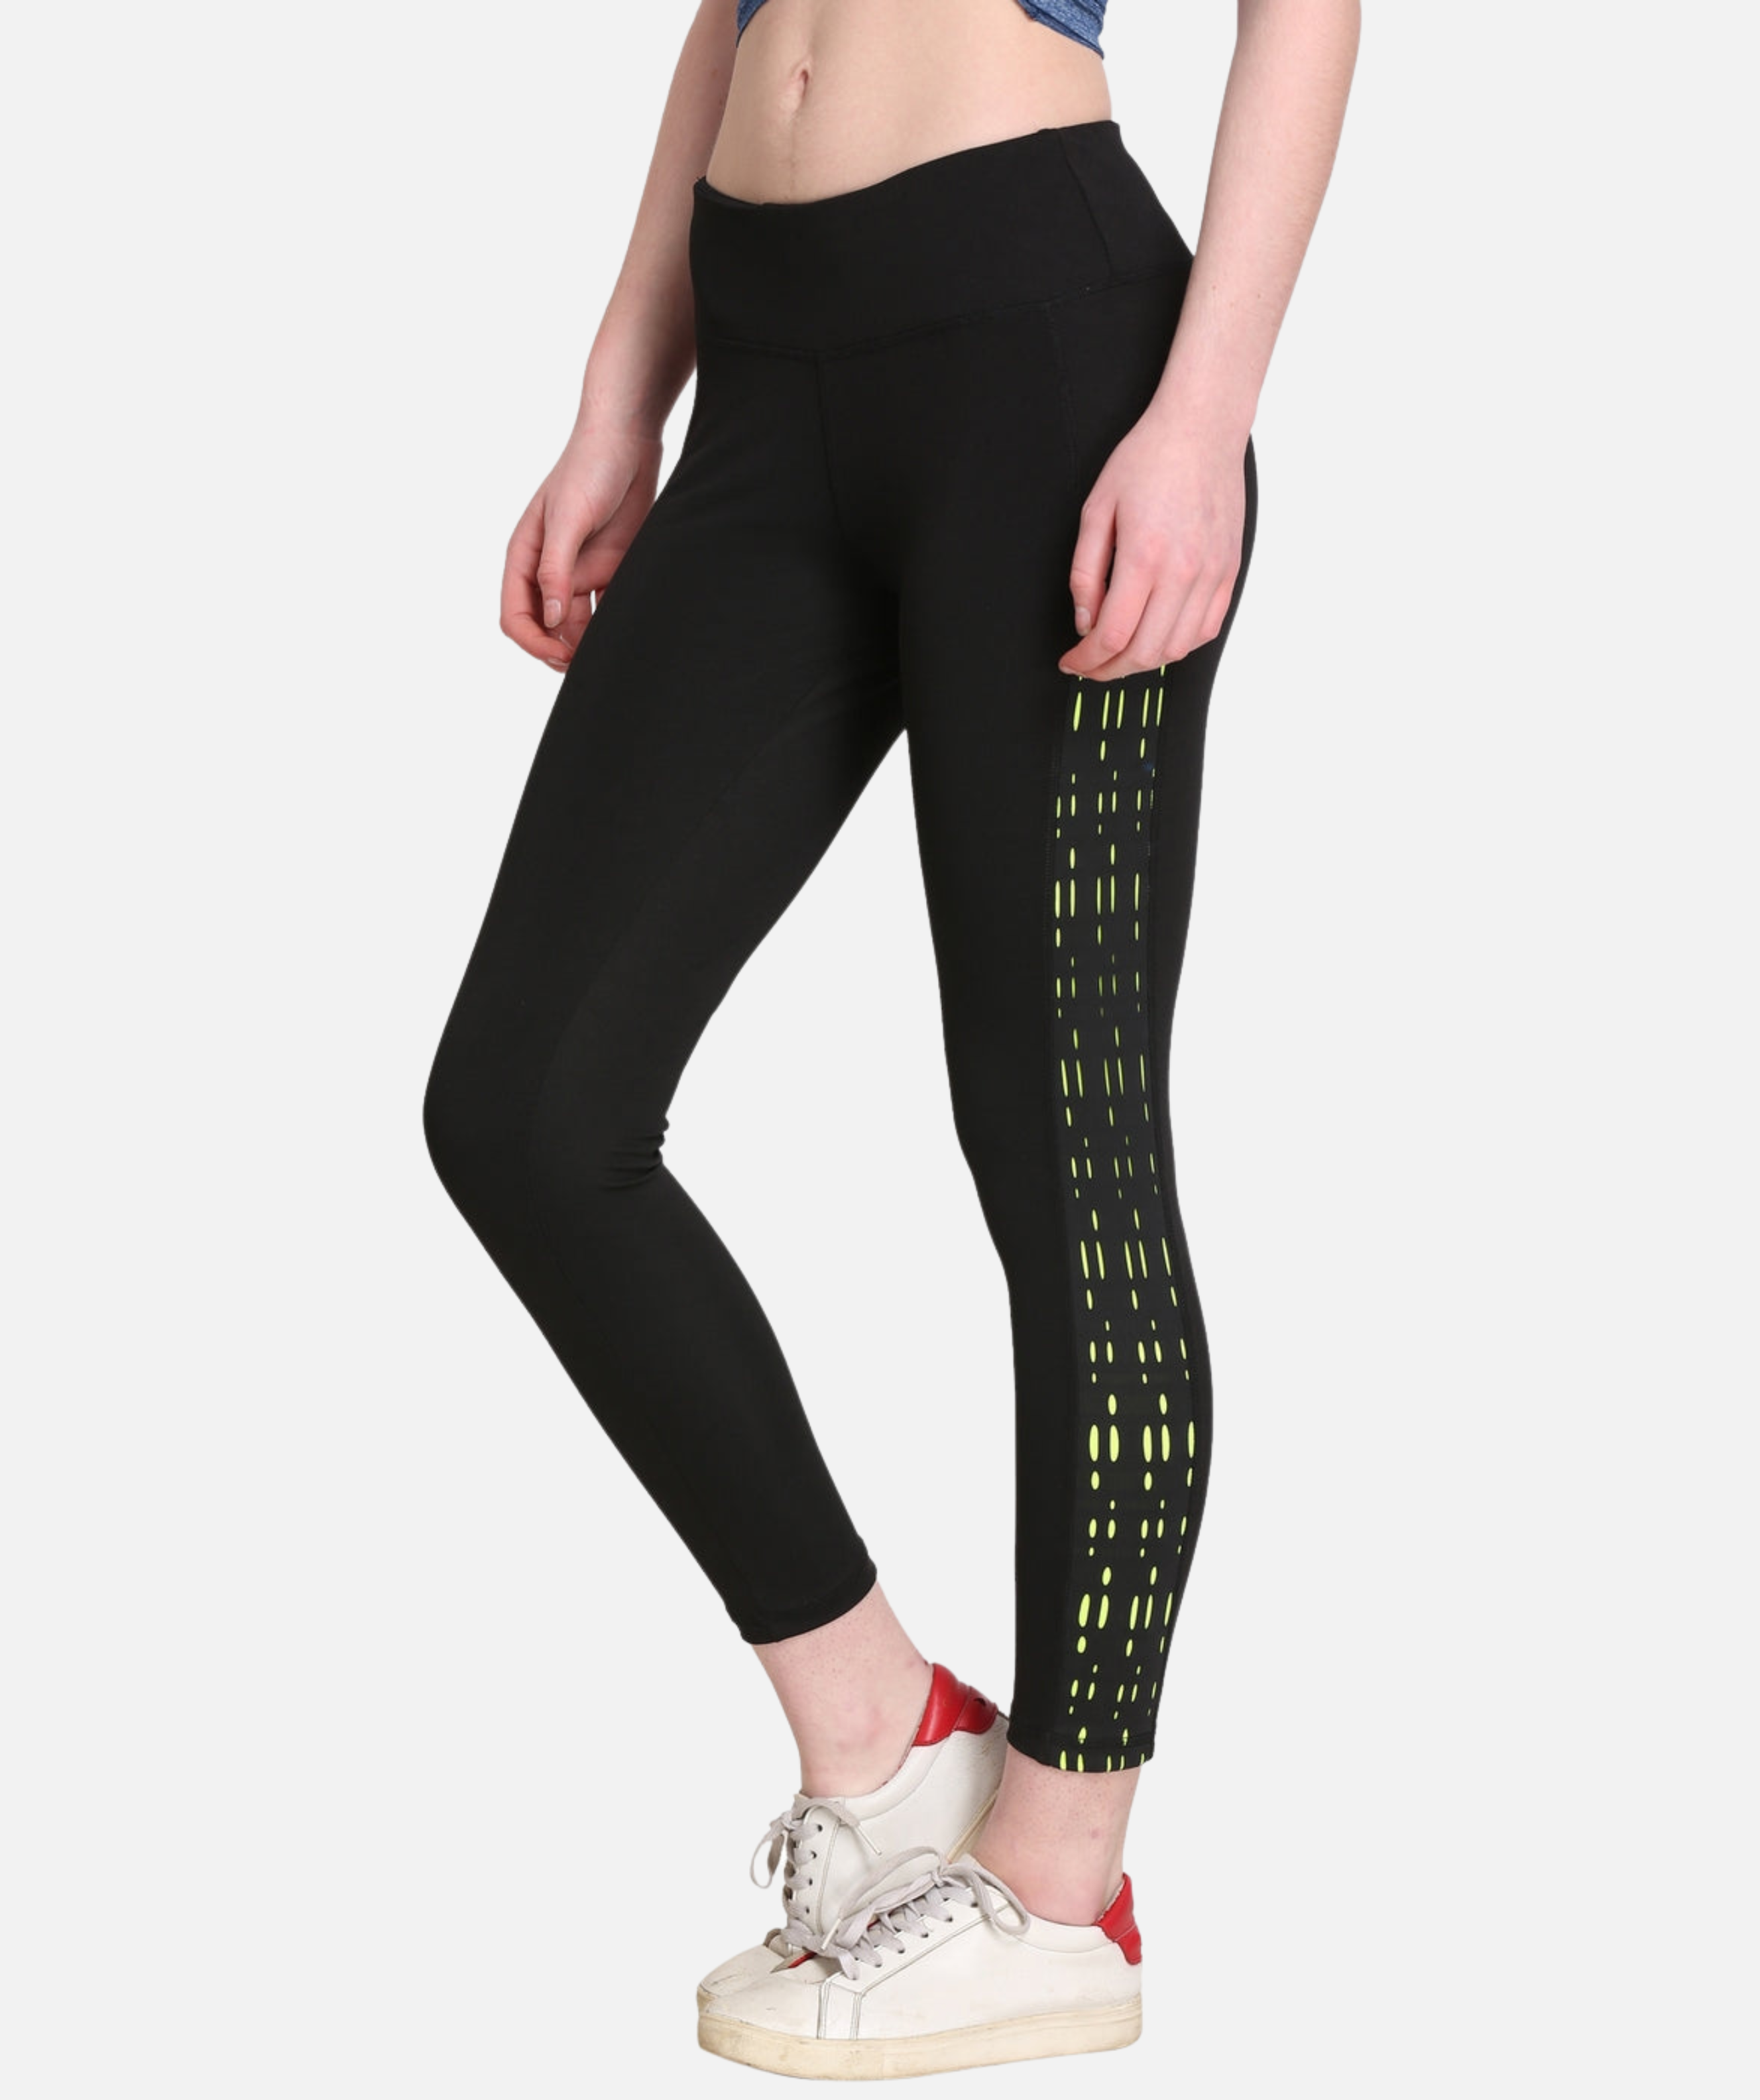 Tie Dye Leggings Women, Spiral Printed Yoga Pants Cute Graphic Workout |  Designer tights, Printed yoga pants, Tie dye leggings